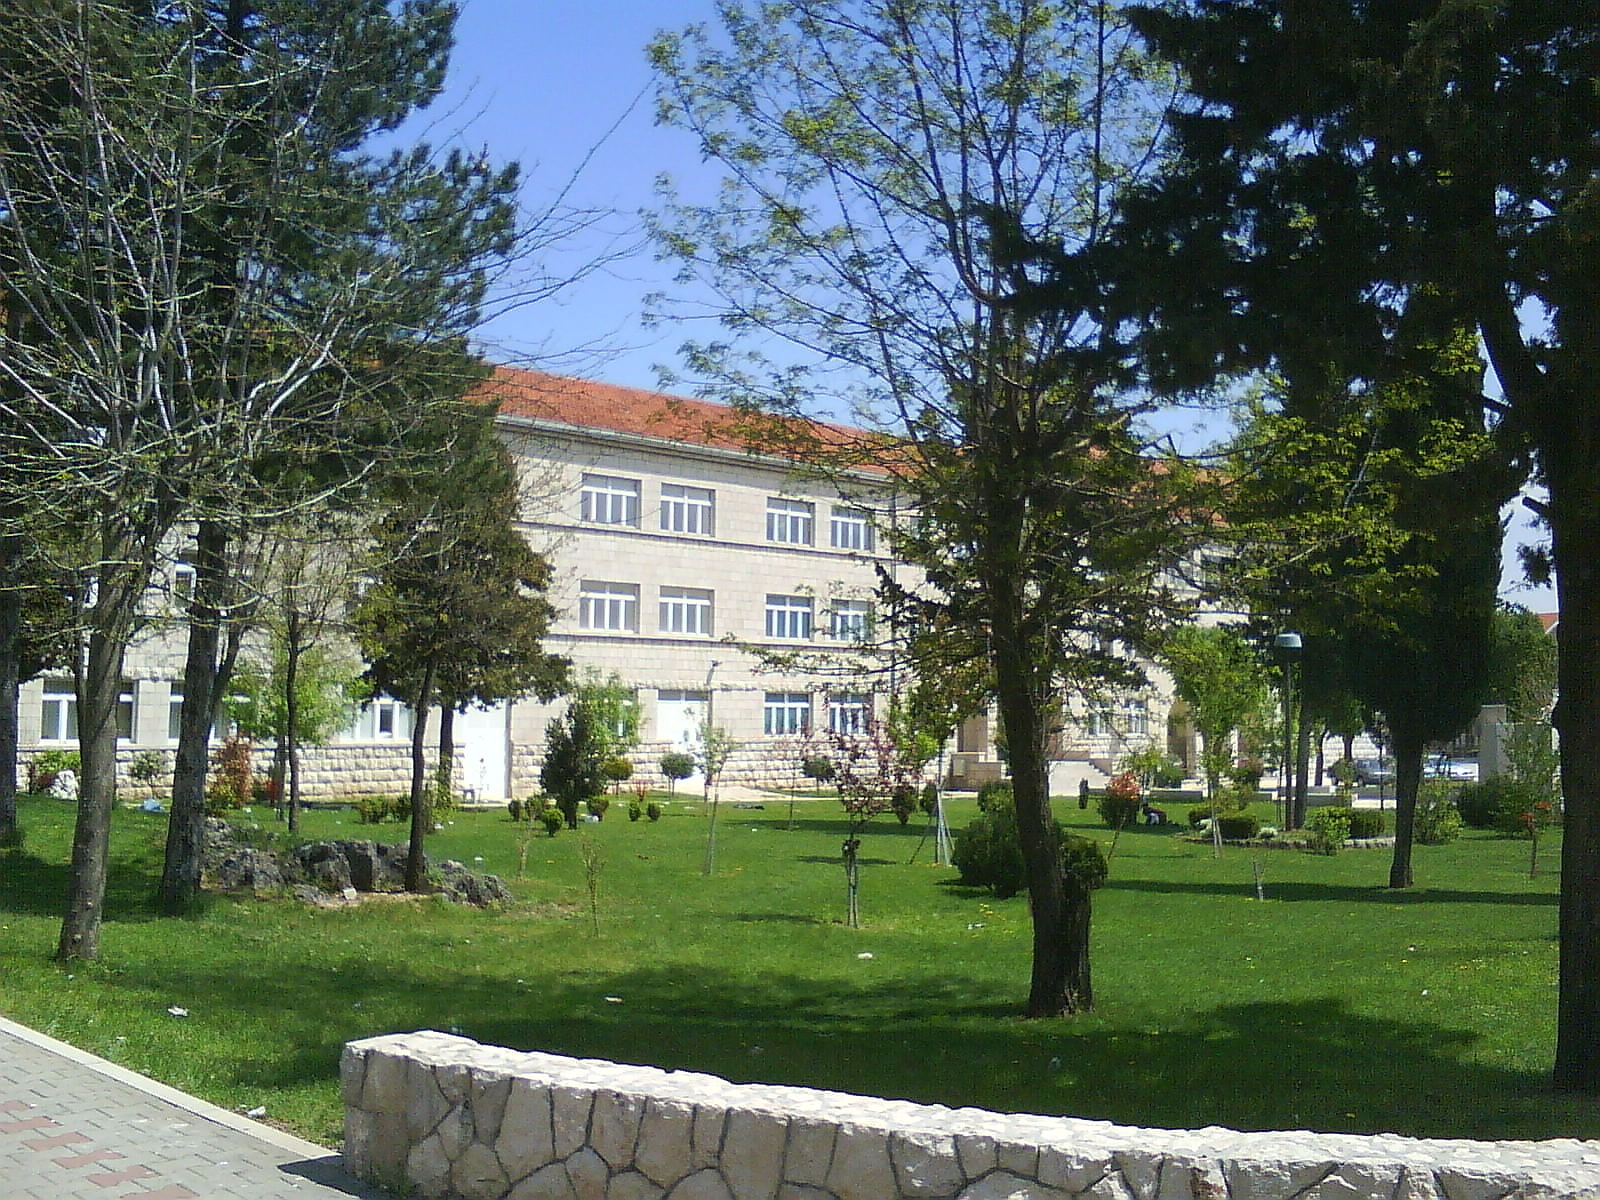 Posušje, Bosnia y Herzegovina